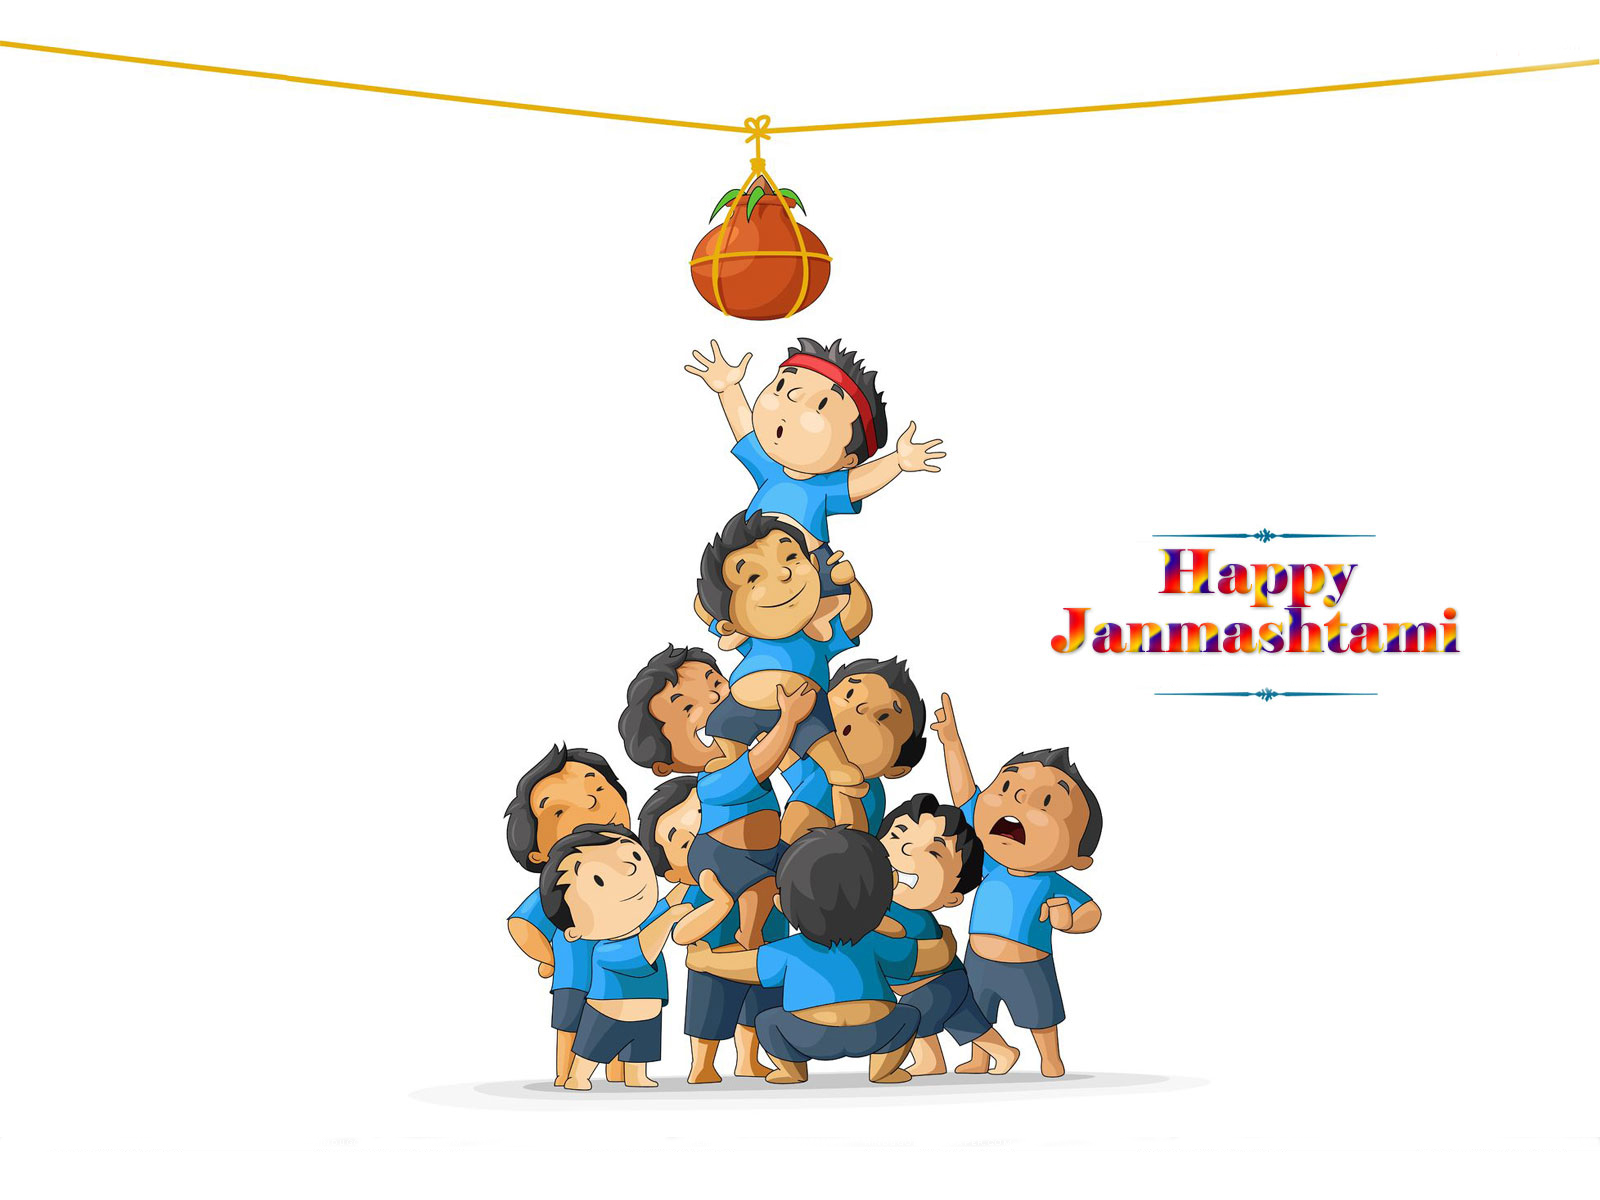 Happy Krishna Janmashtami HD Images With Best Wishes